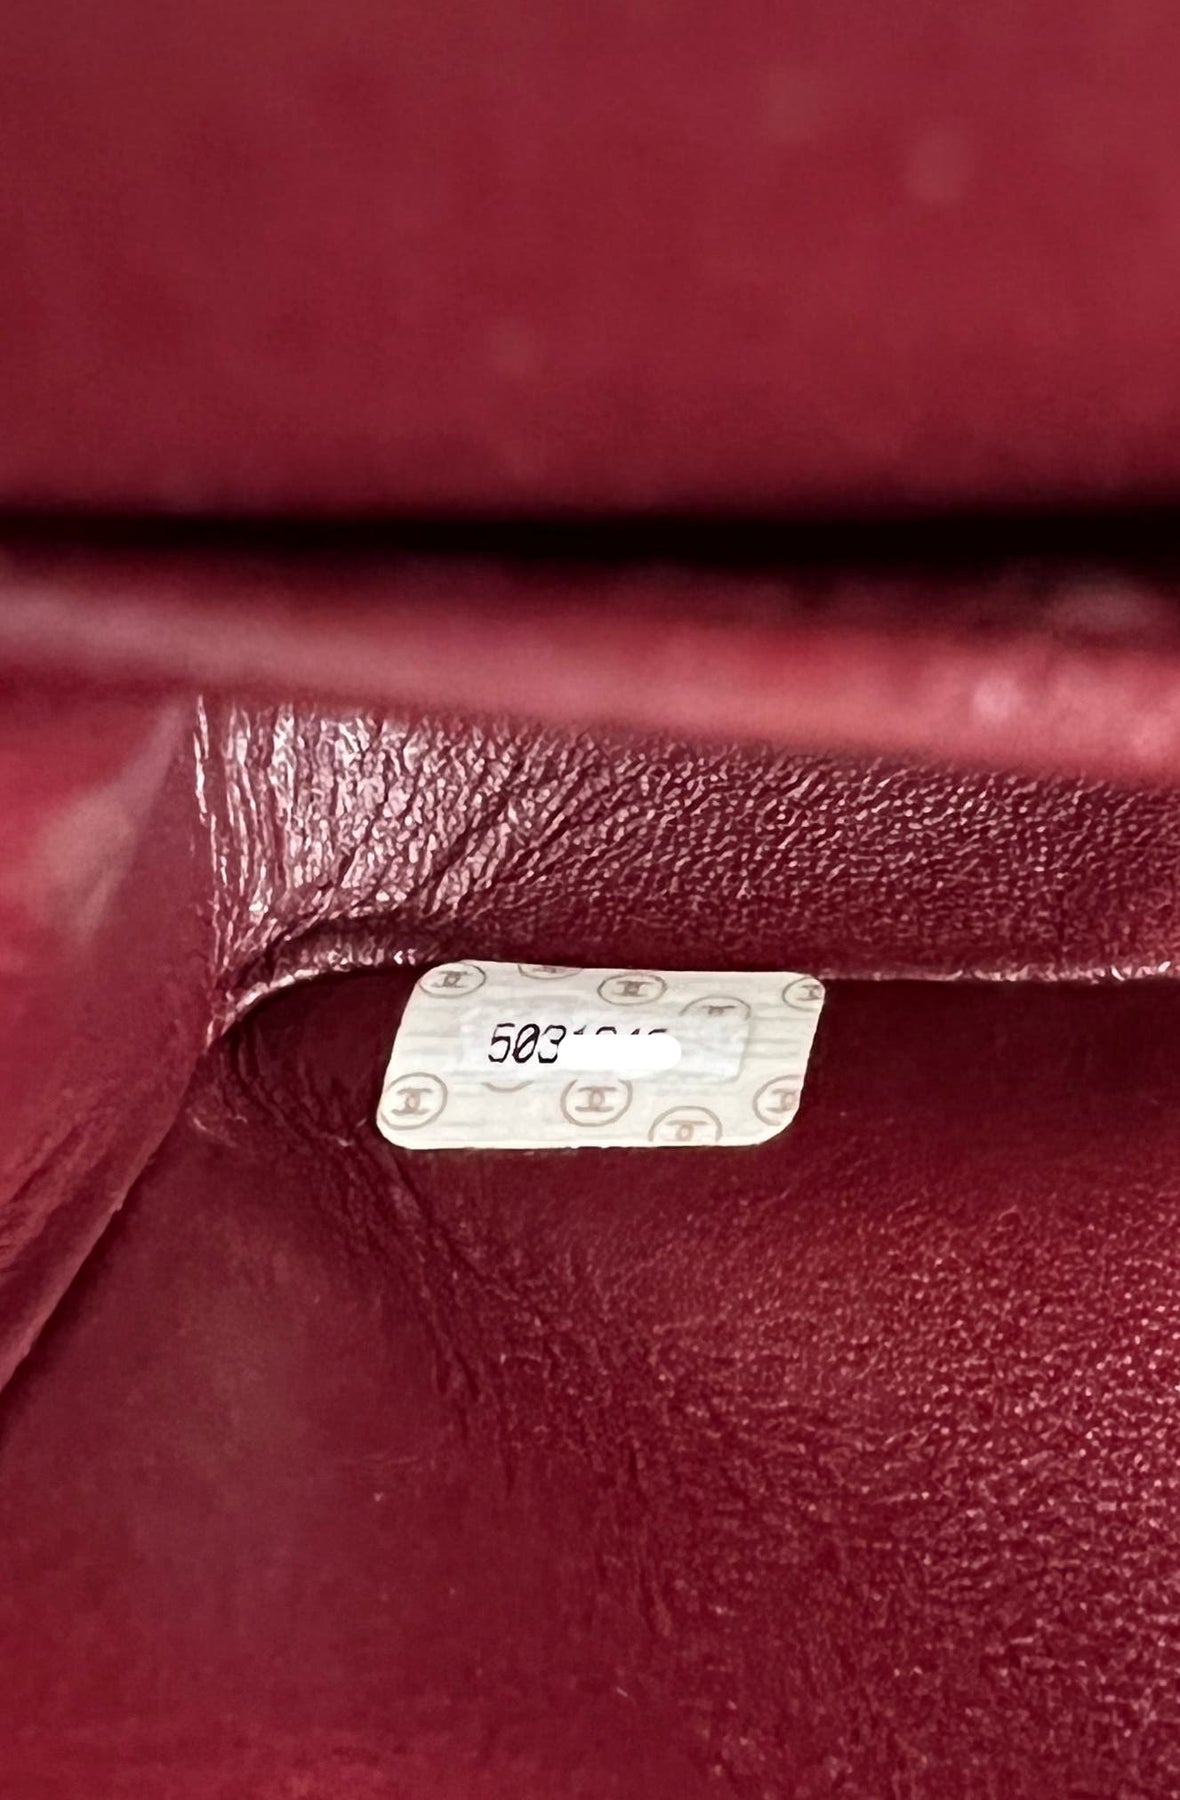 Chanel Red Lambskin Medium Classic Double Flap Bag 24k GHW